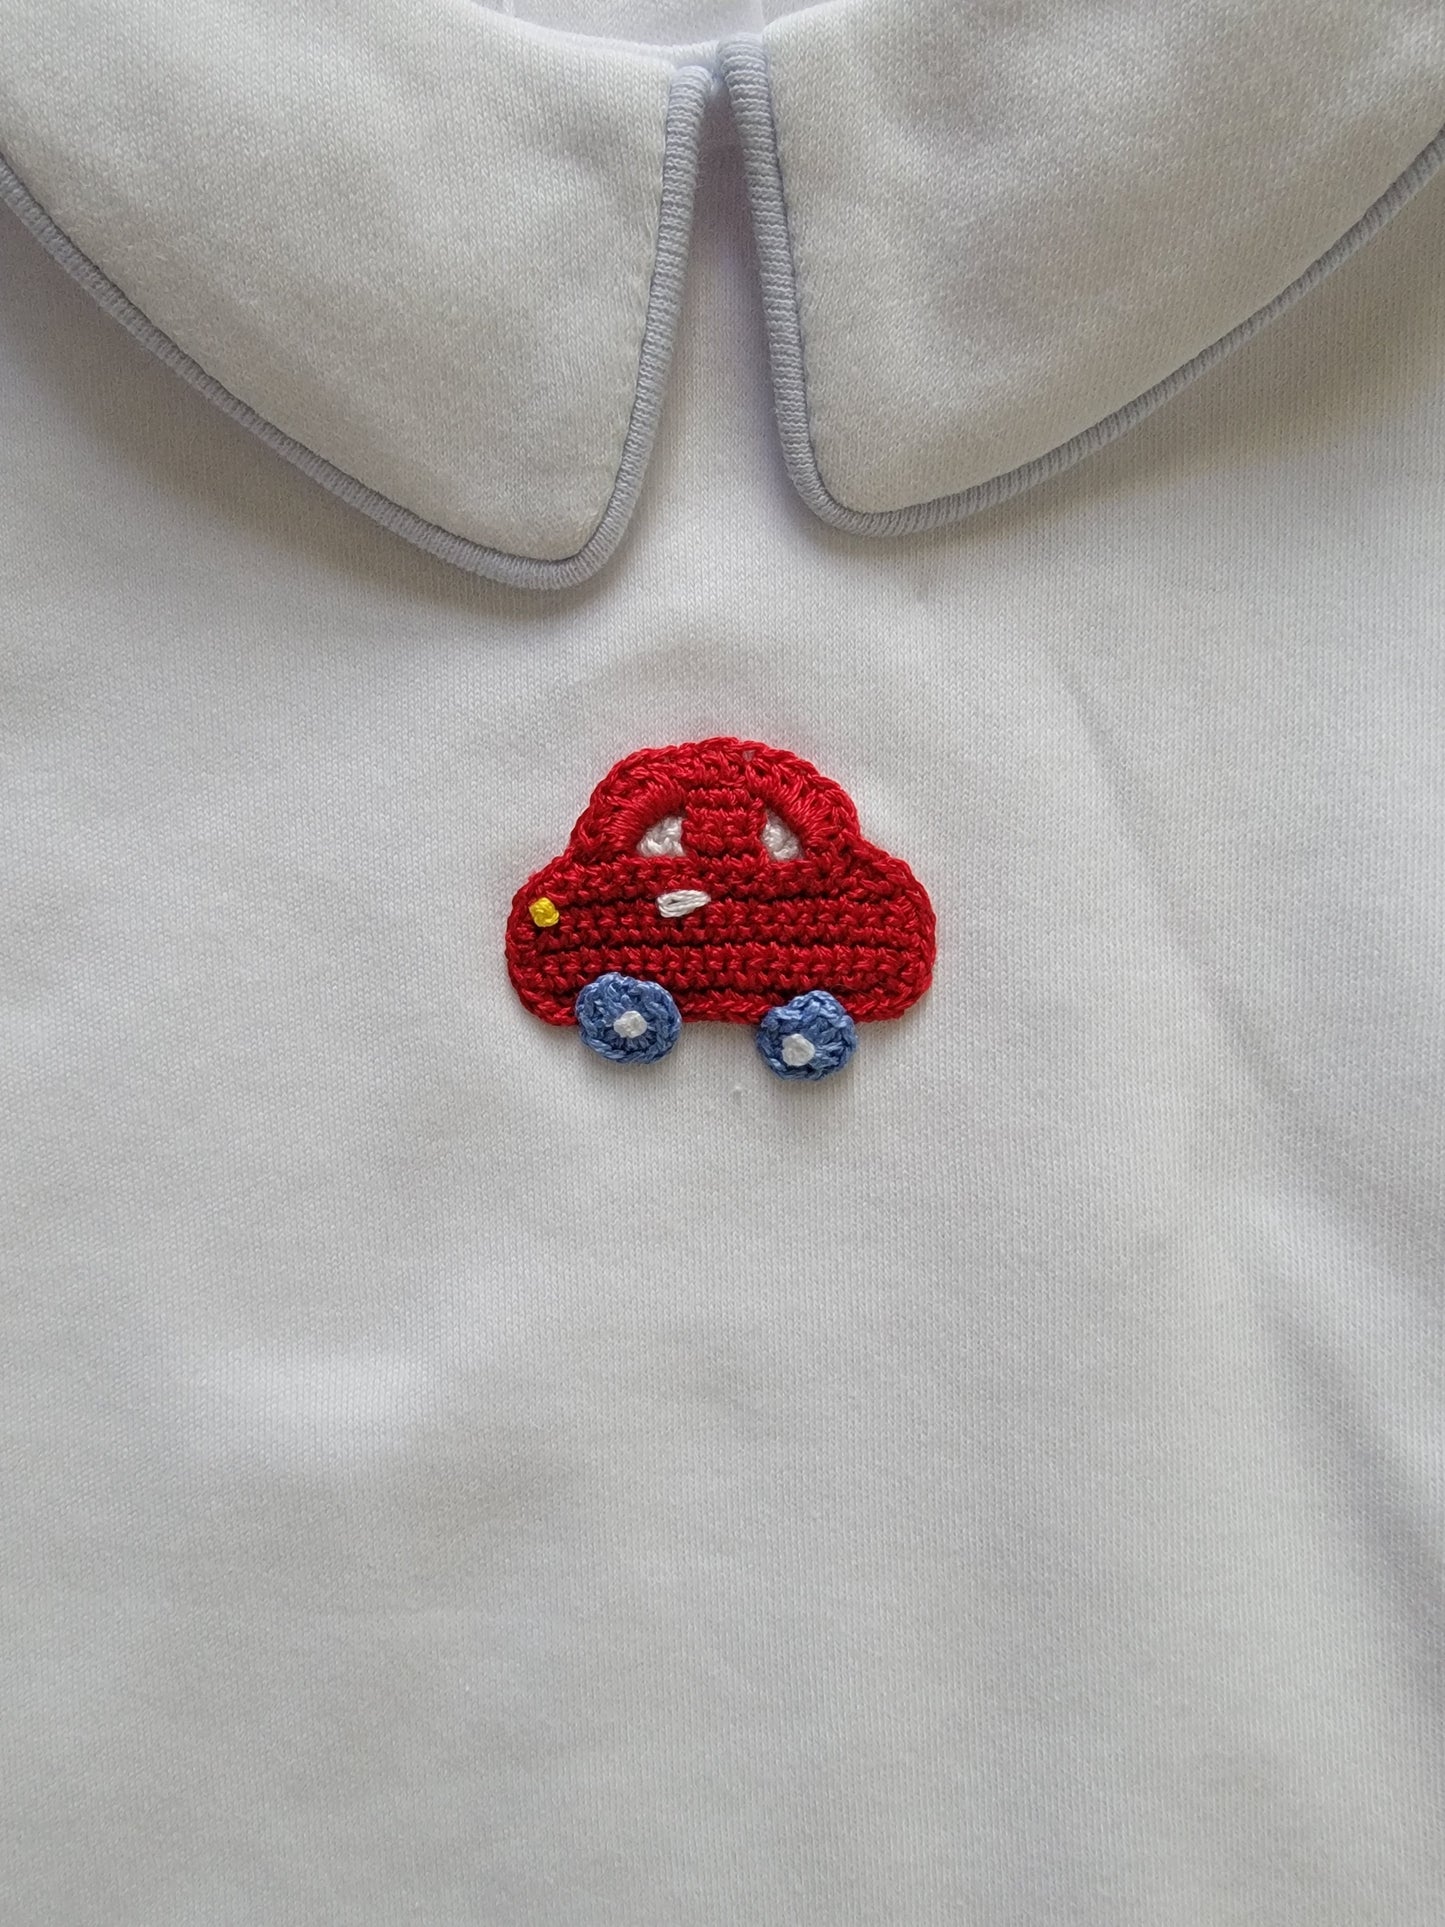 Boy's Short Sleeve Collared Crocheted Red Car Shirt